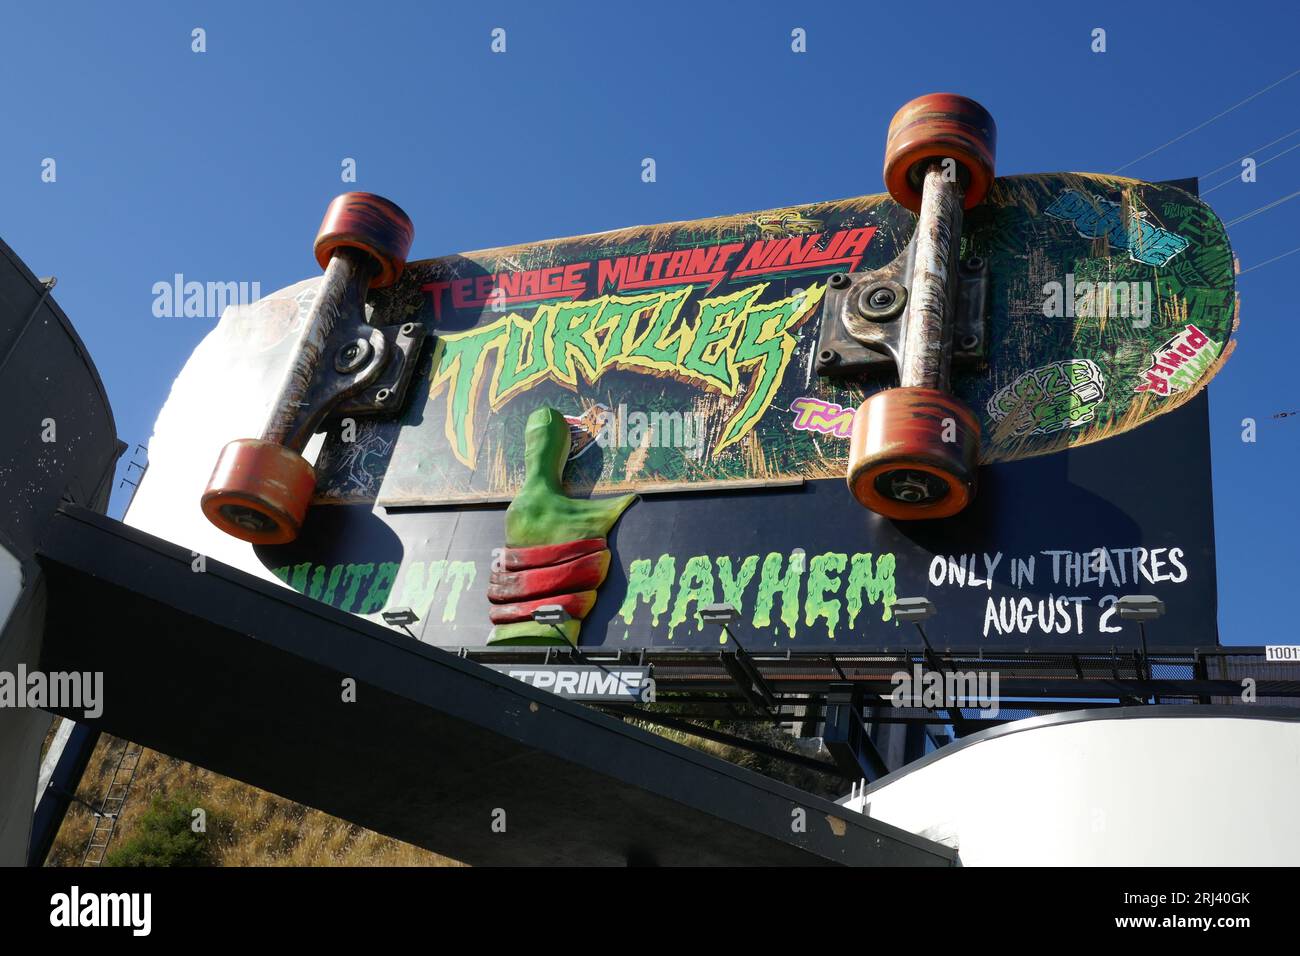 https://c8.alamy.com/comp/2RJ40GK/los-angeles-california-usa-20th-july-2023-teenage-mutant-ninja-turtles-mutant-mayhem-skateboard-billboard-on-sunset-blvd-on-july-20-2023-in-los-angeles-california-usa-photo-by-barry-kingalamy-stock-photo-2RJ40GK.jpg